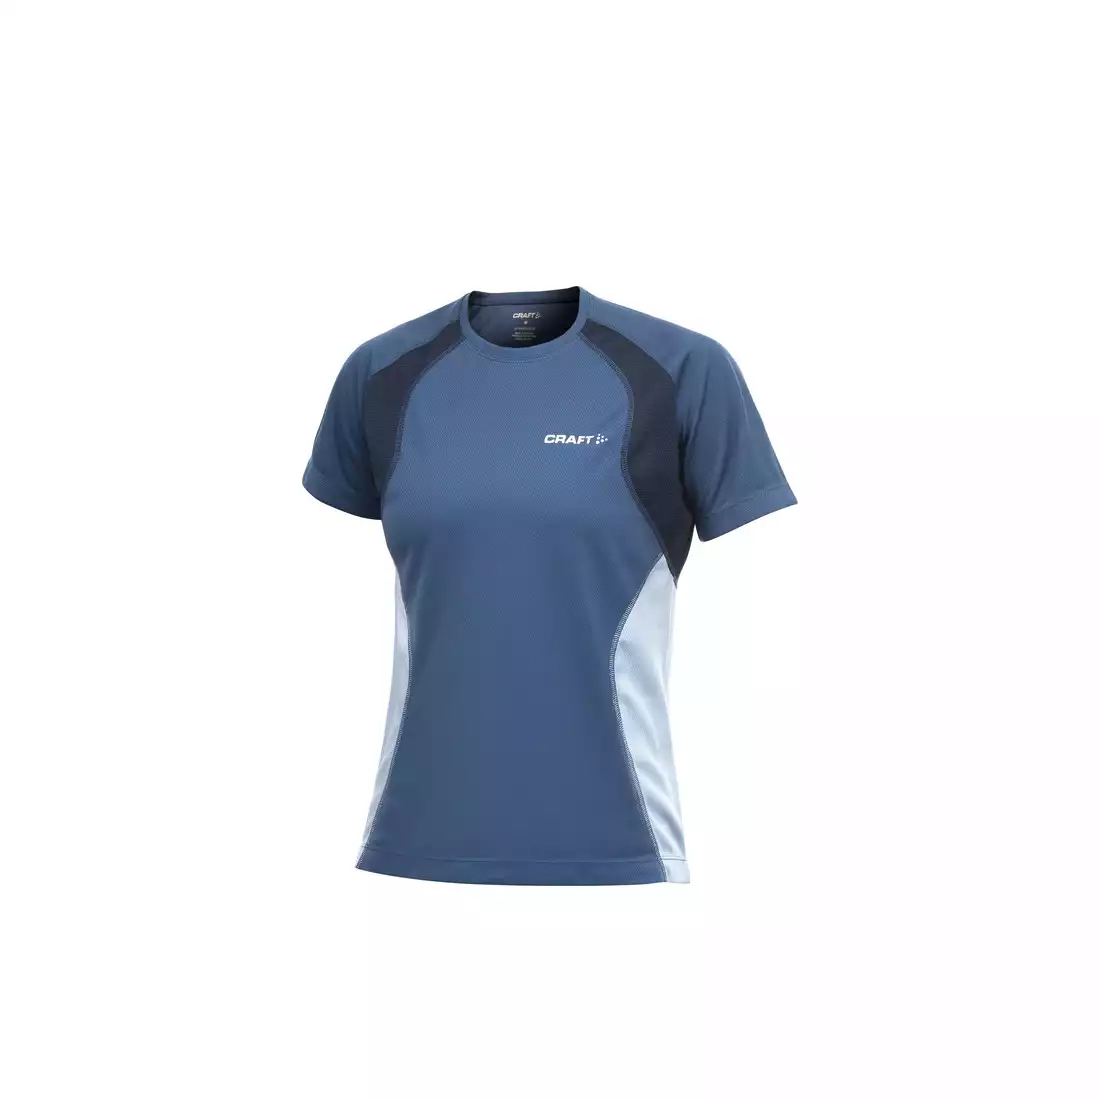 CRAFT ACTIVE meshowa damska koszulka do biegania 1900766-2940